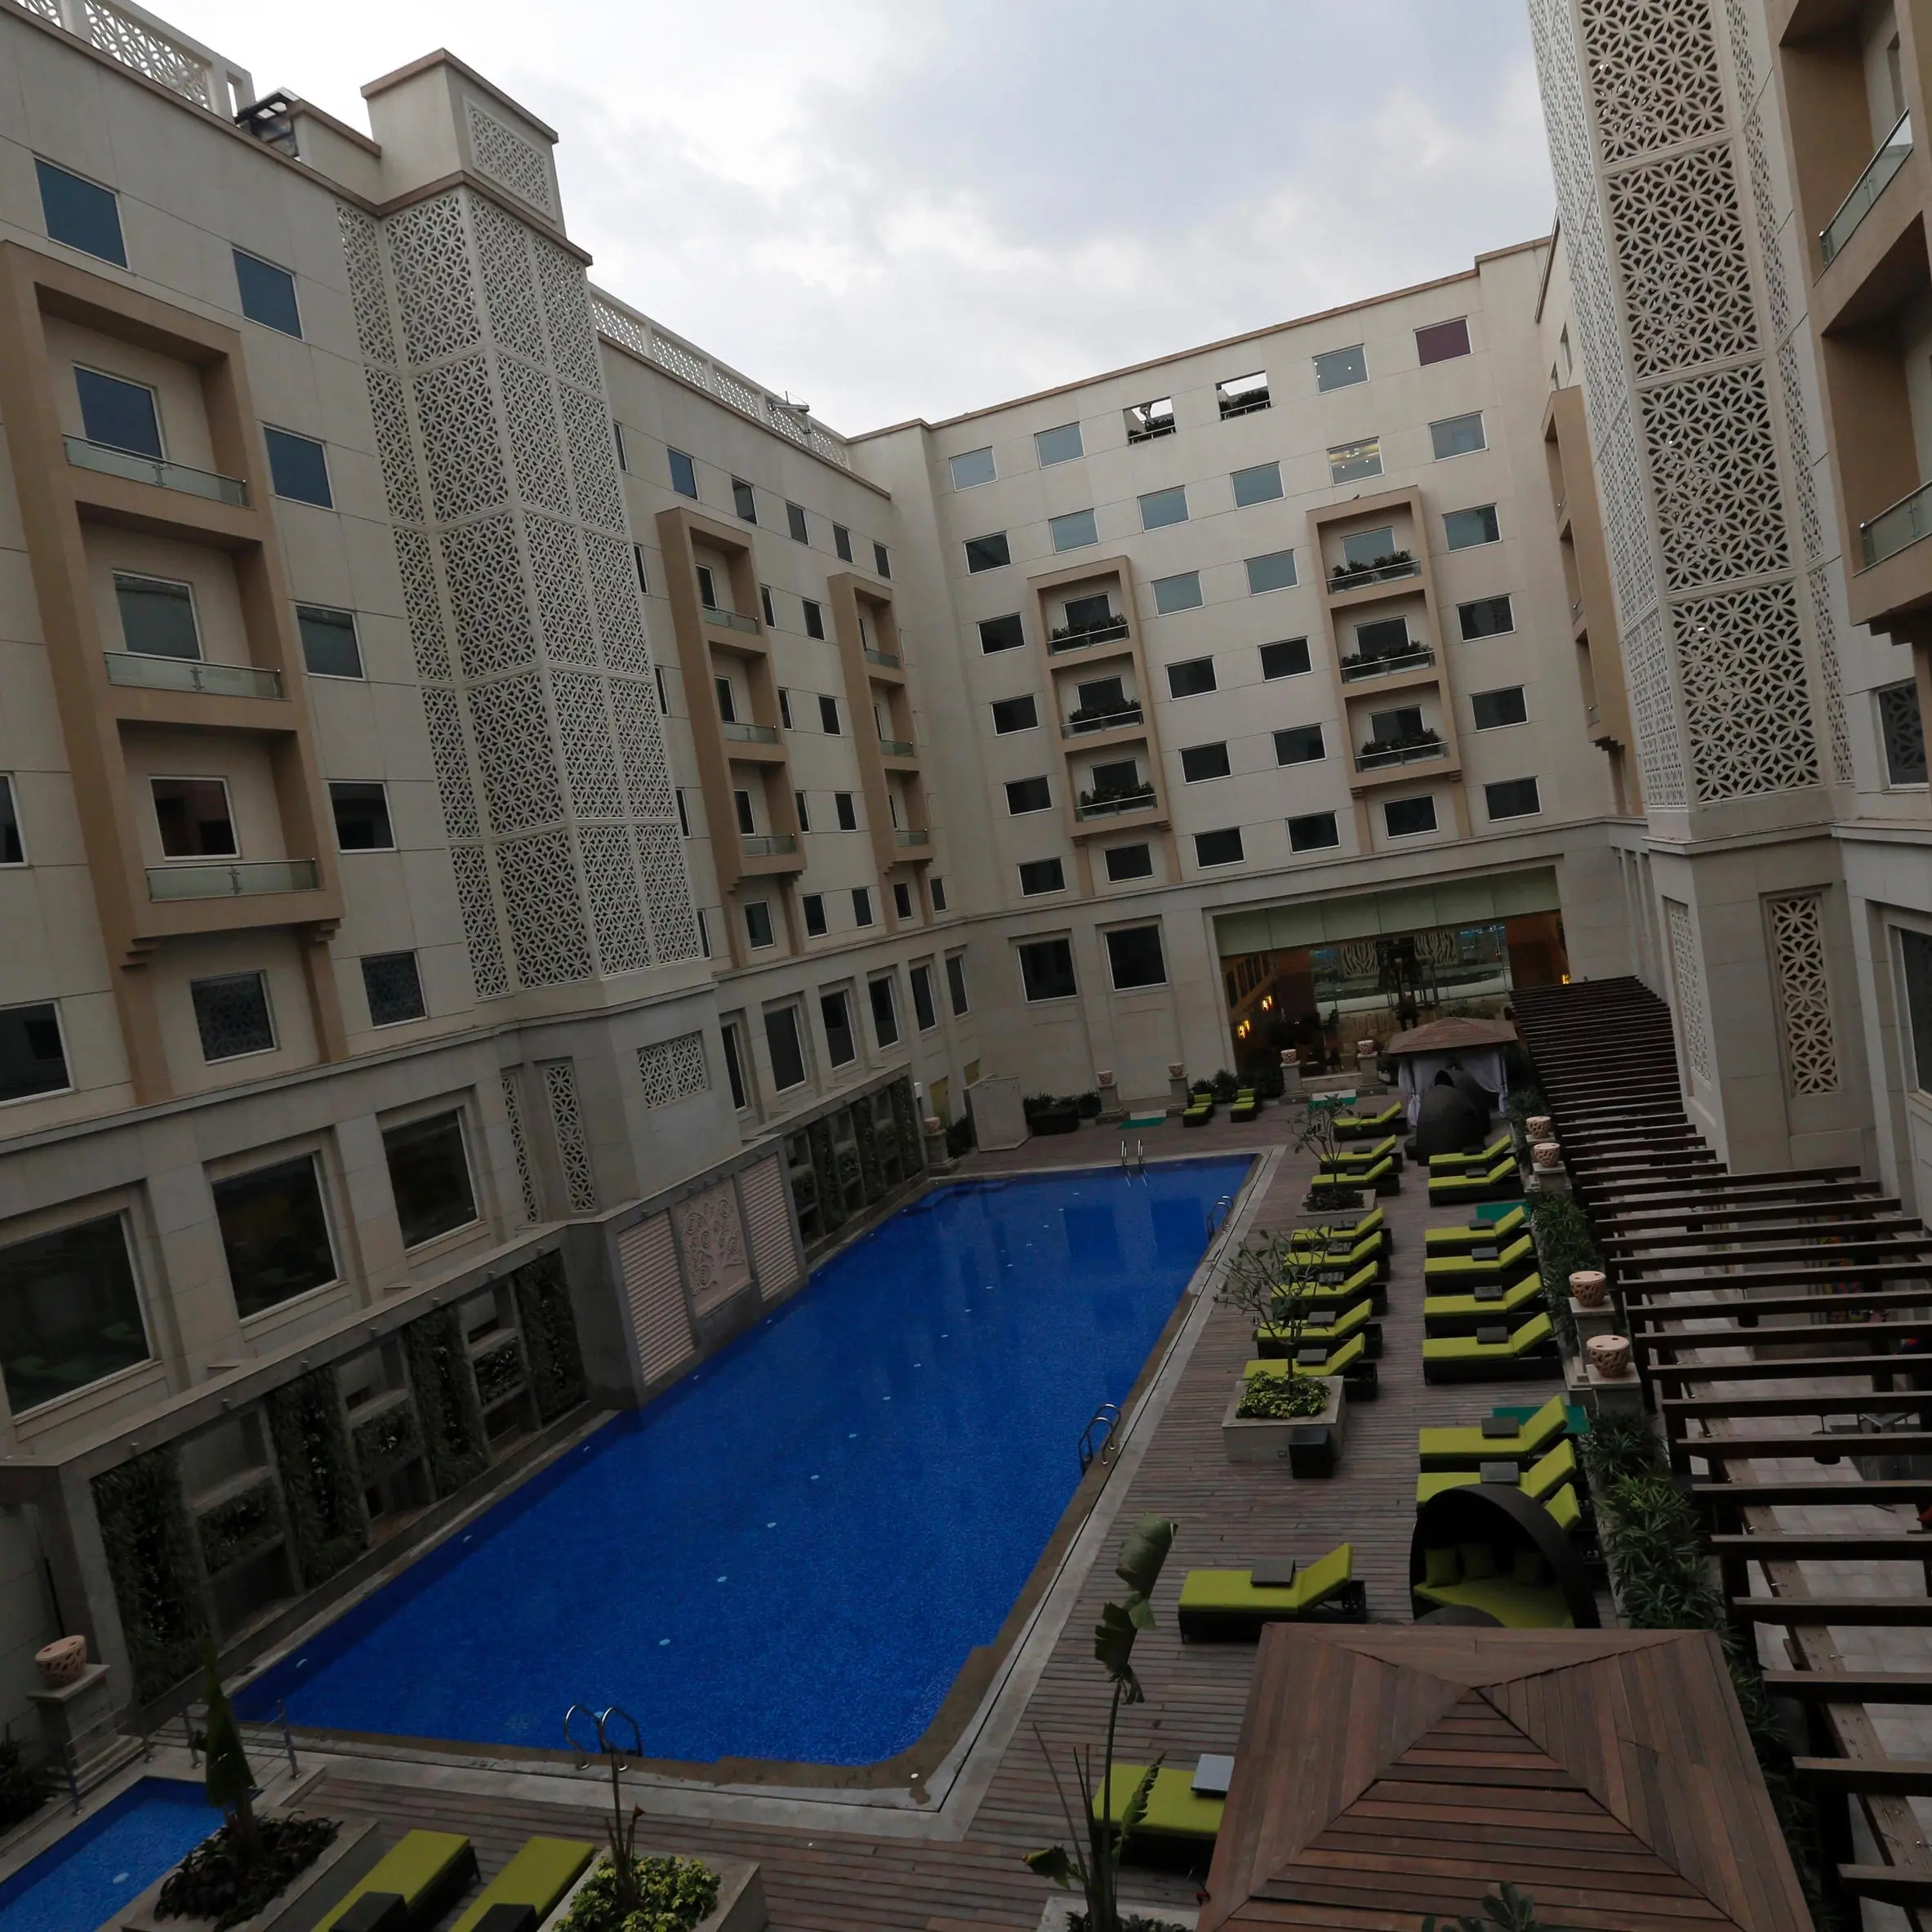 Indias Lemon Tree Hotels in GCC push